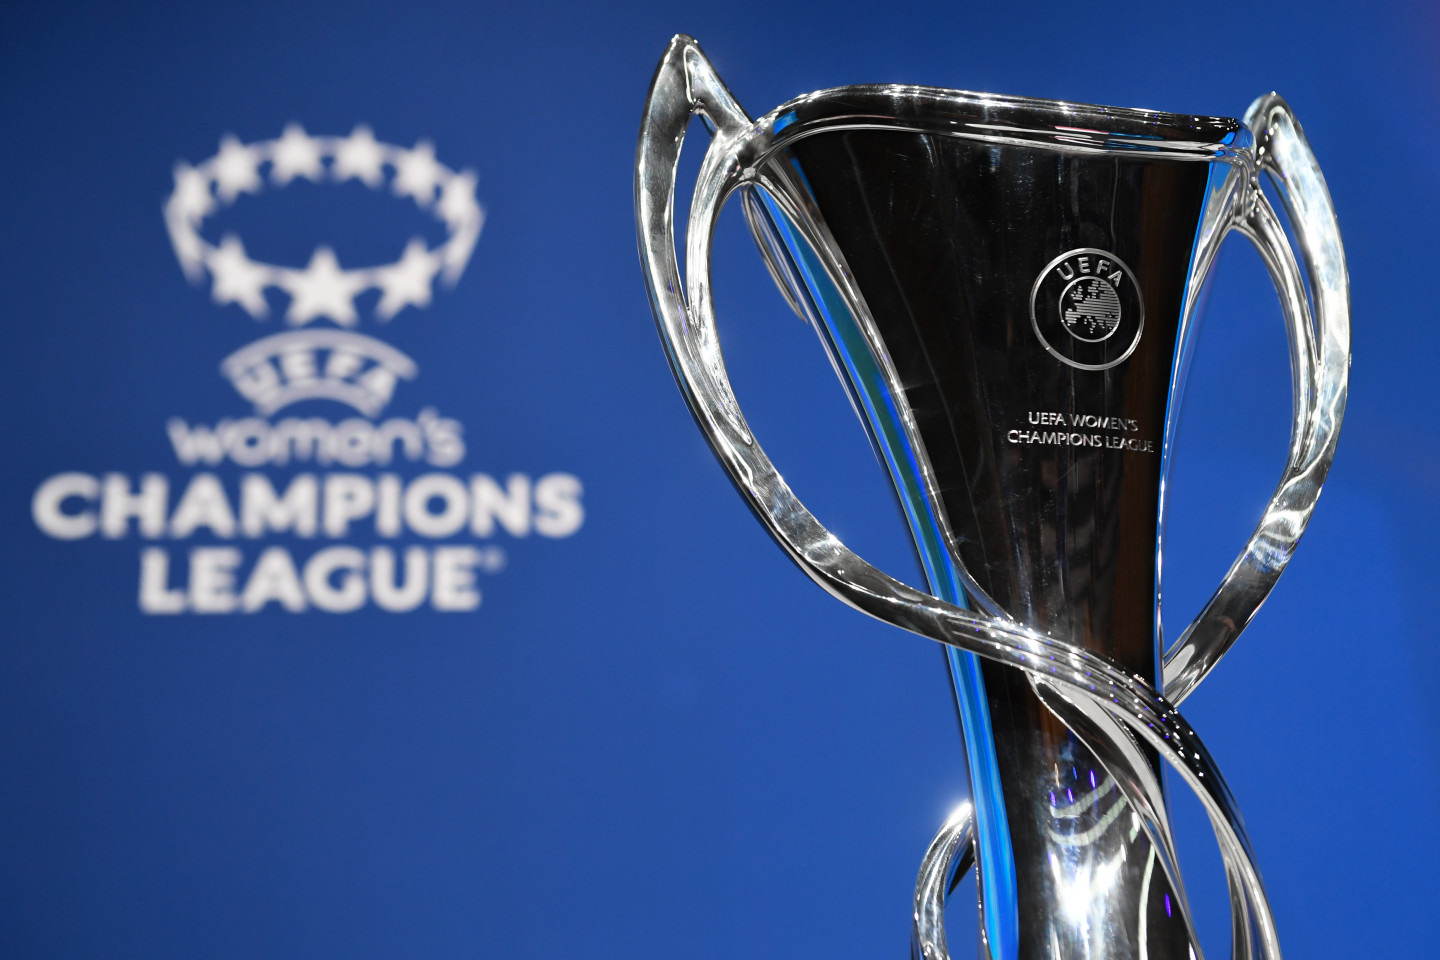 CAF Confirms Date For Champions League, CC Quarter-finals Draw